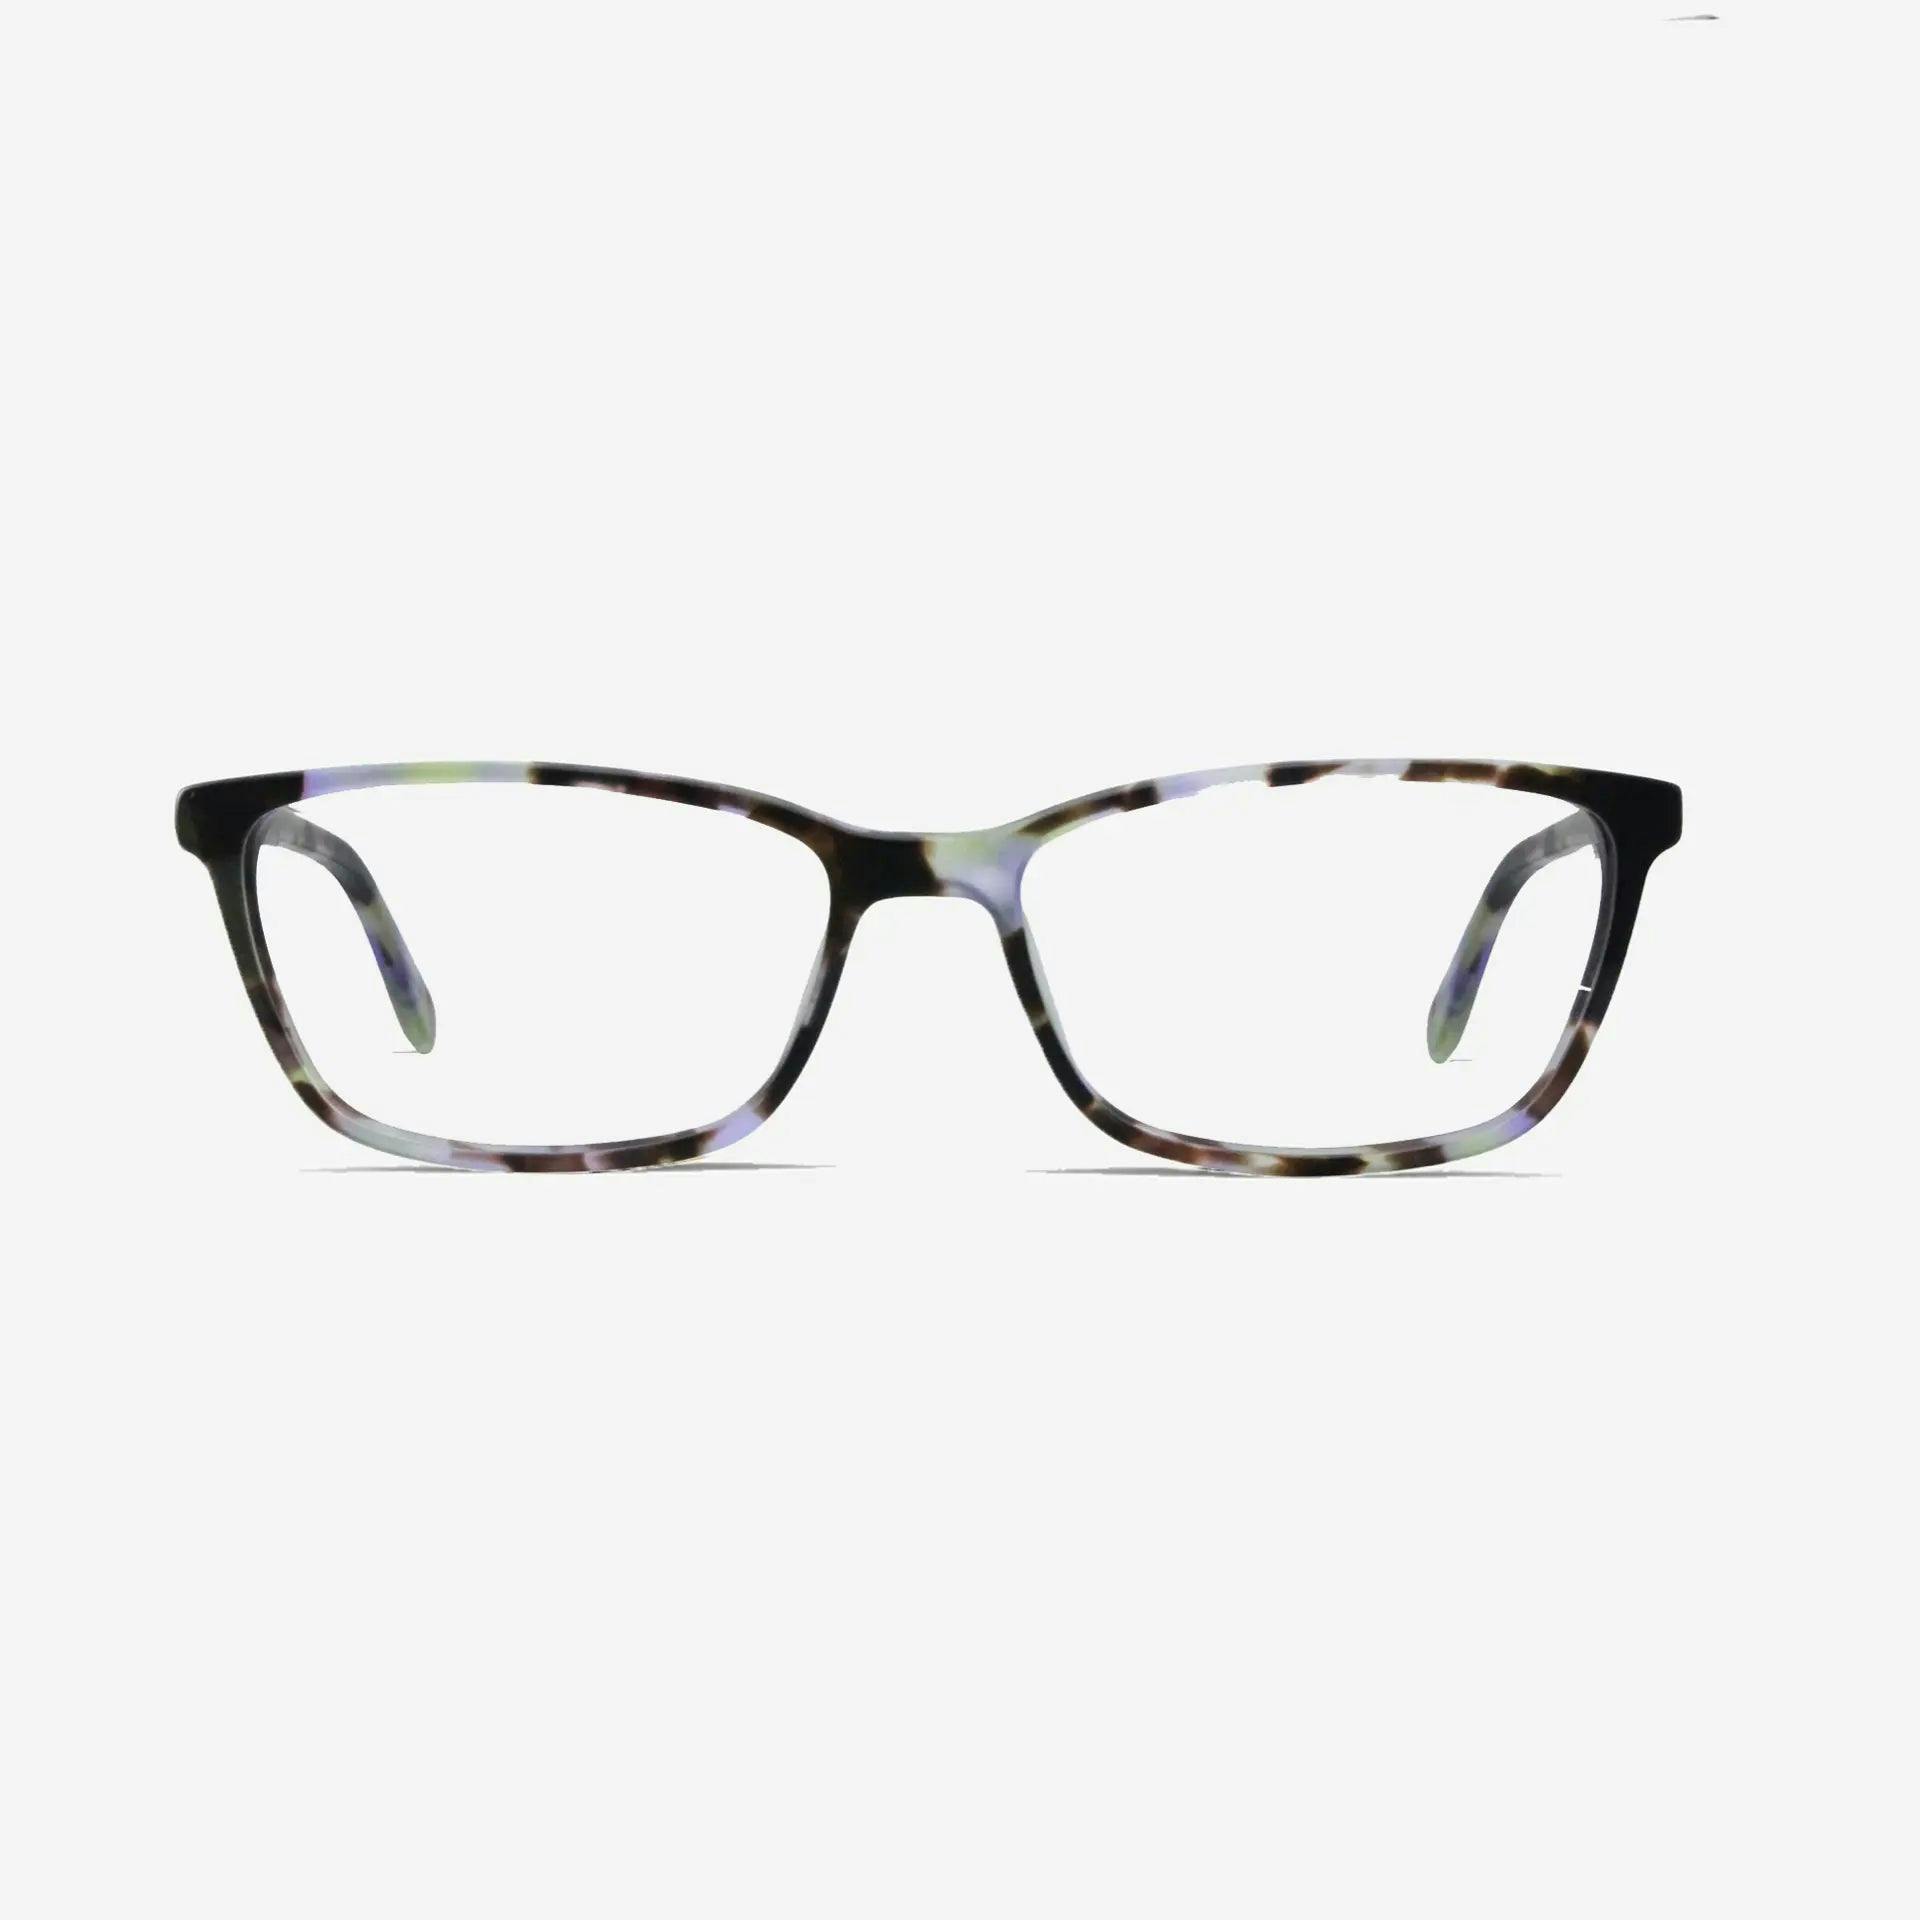 Huxley glasses | Lucy Green Tortoise 